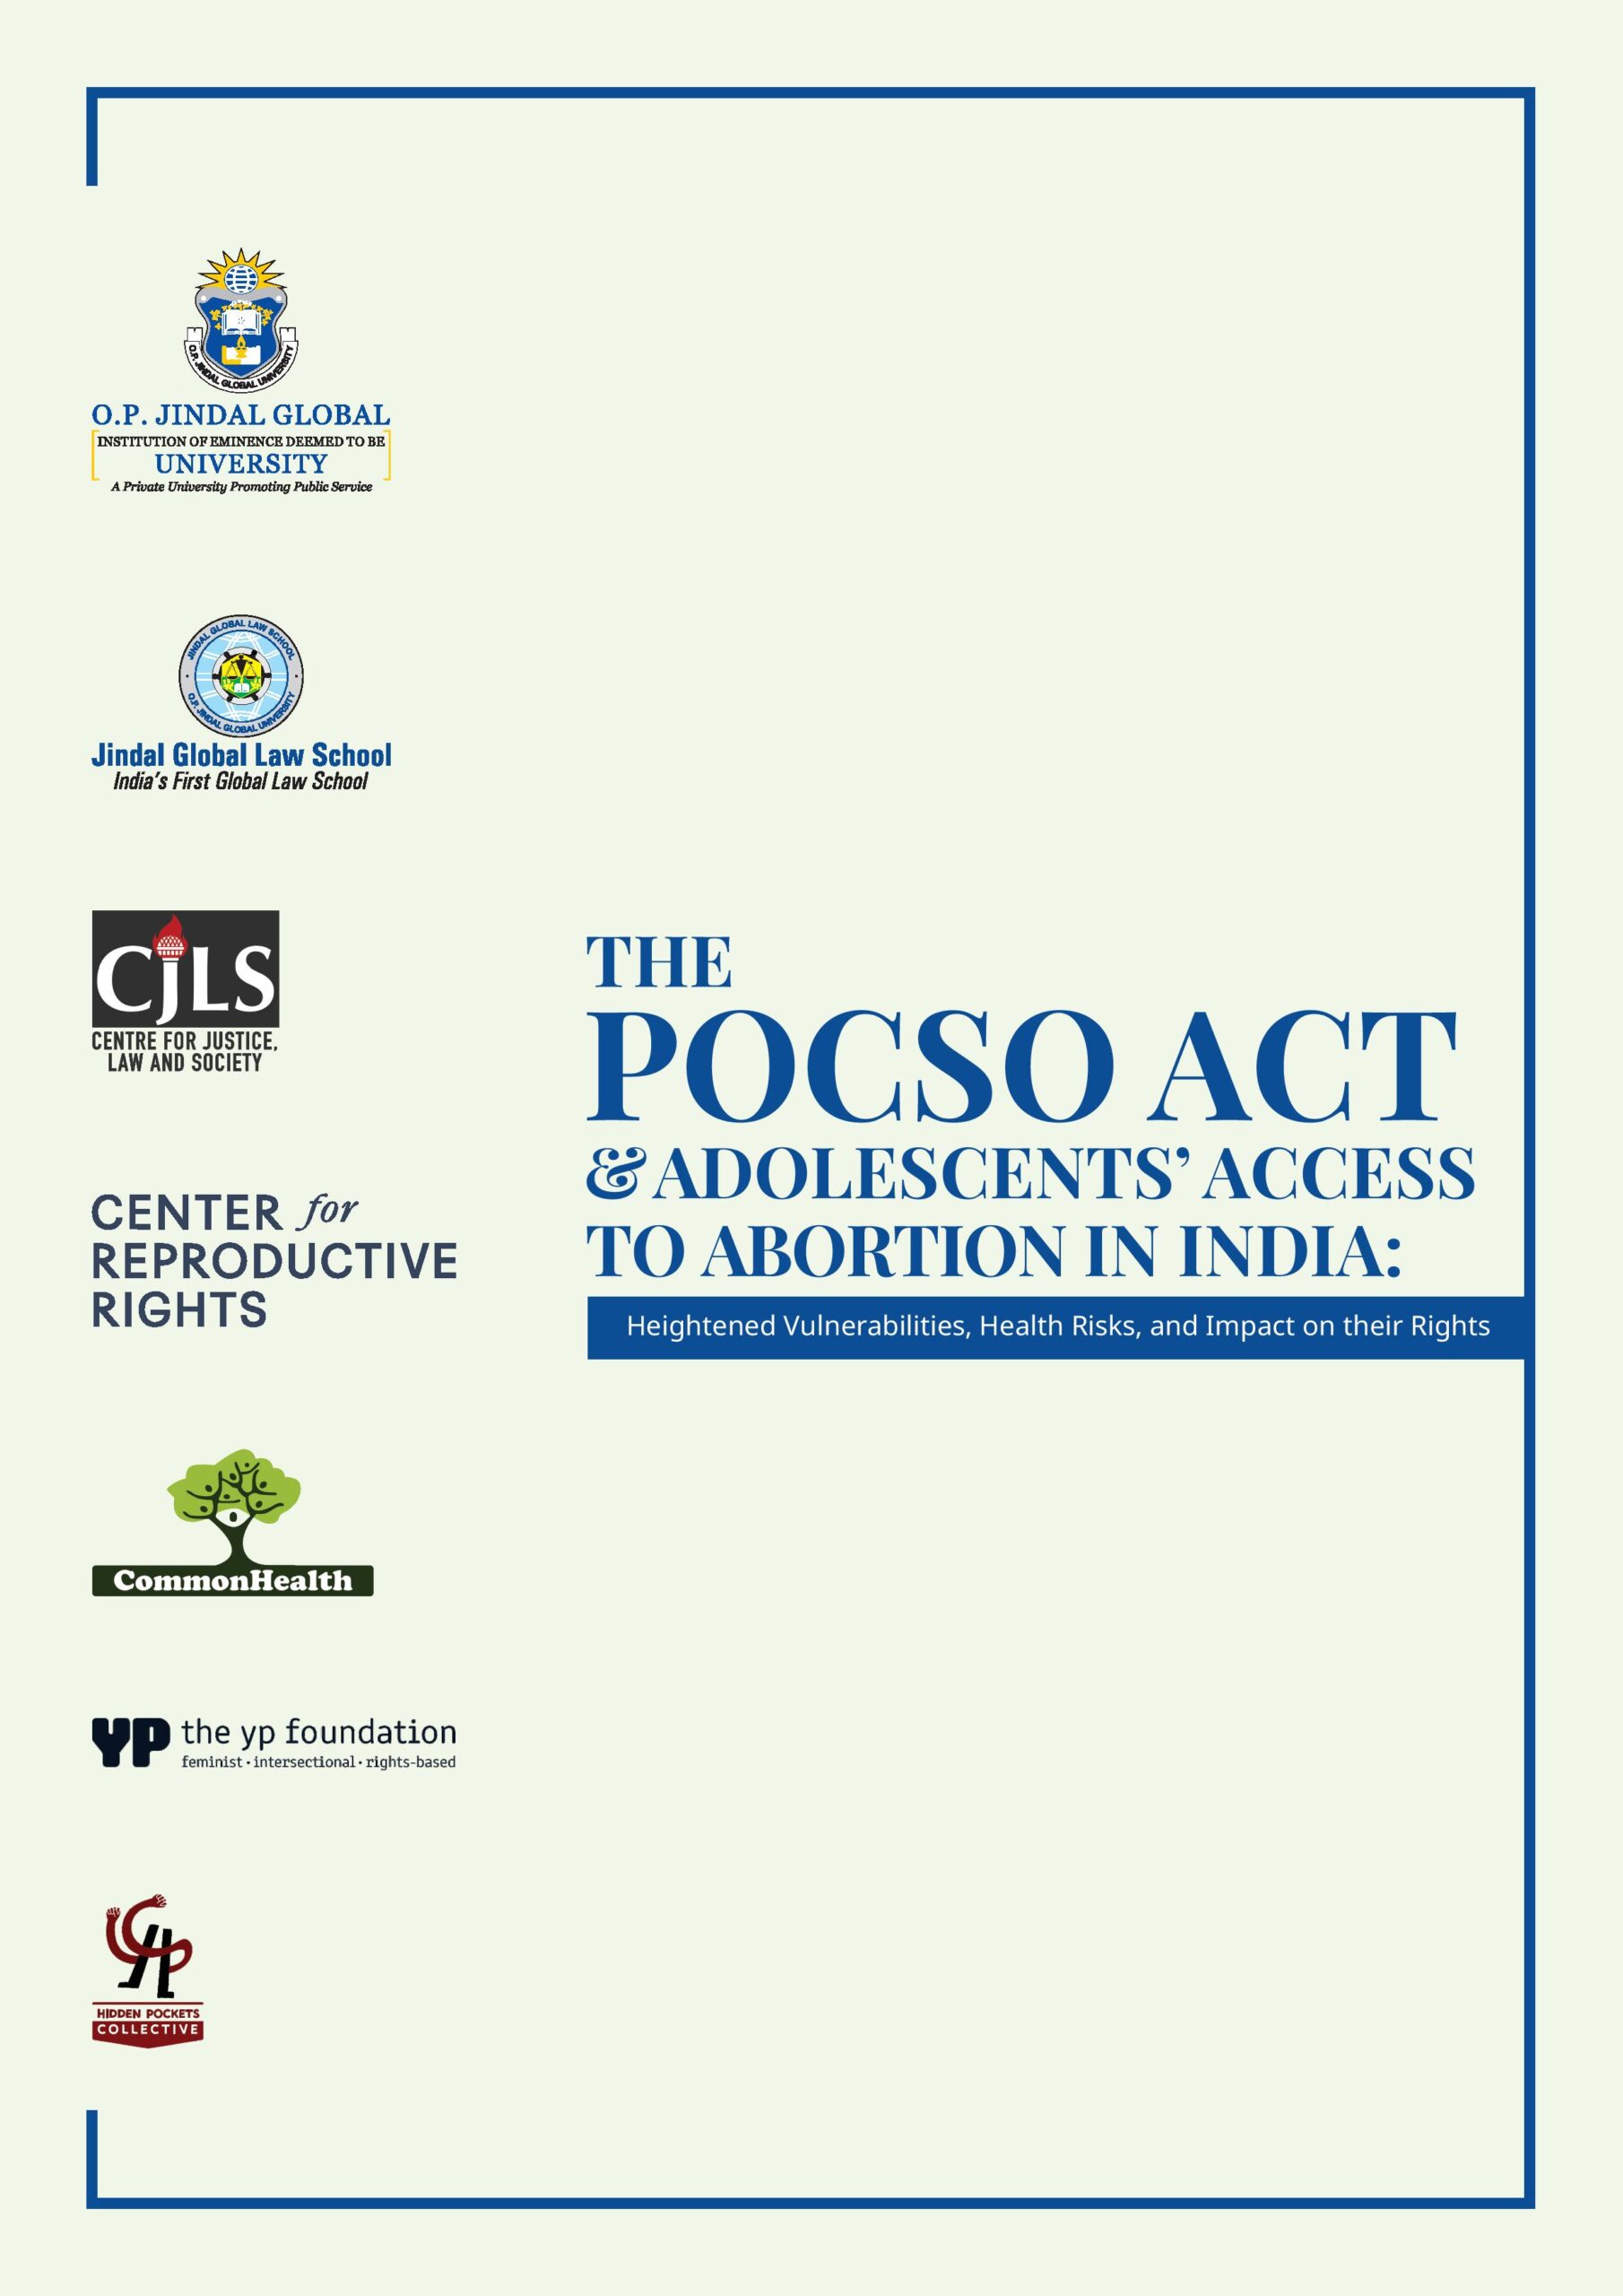 Read the POSCO Act factsheet here. 